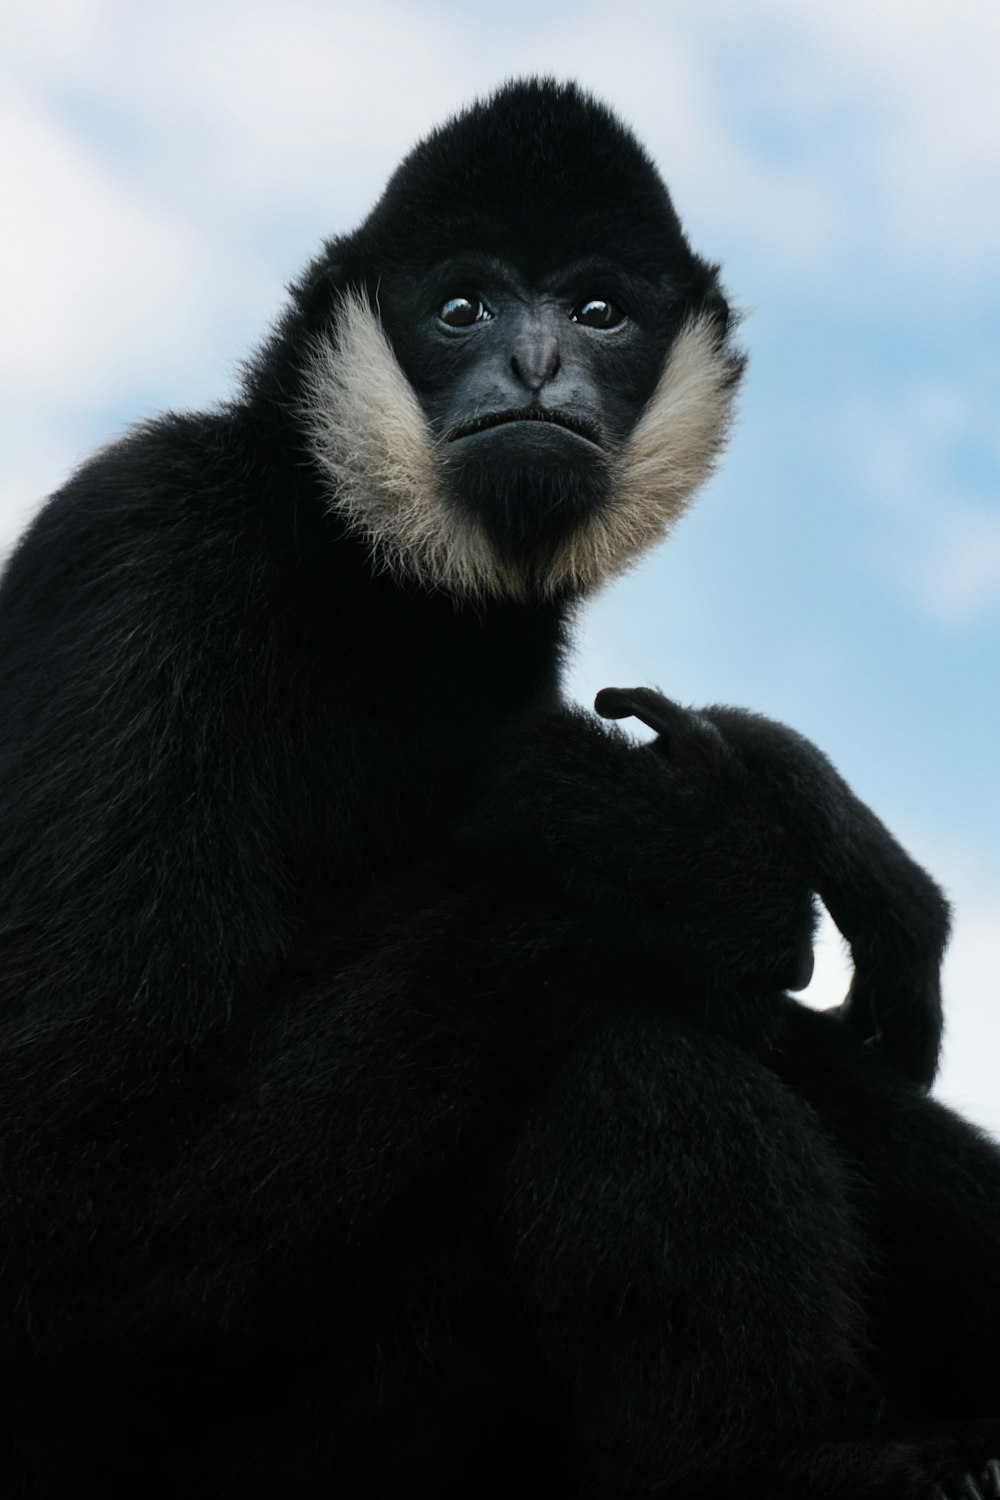 black and white monkey under blue sky during daytime